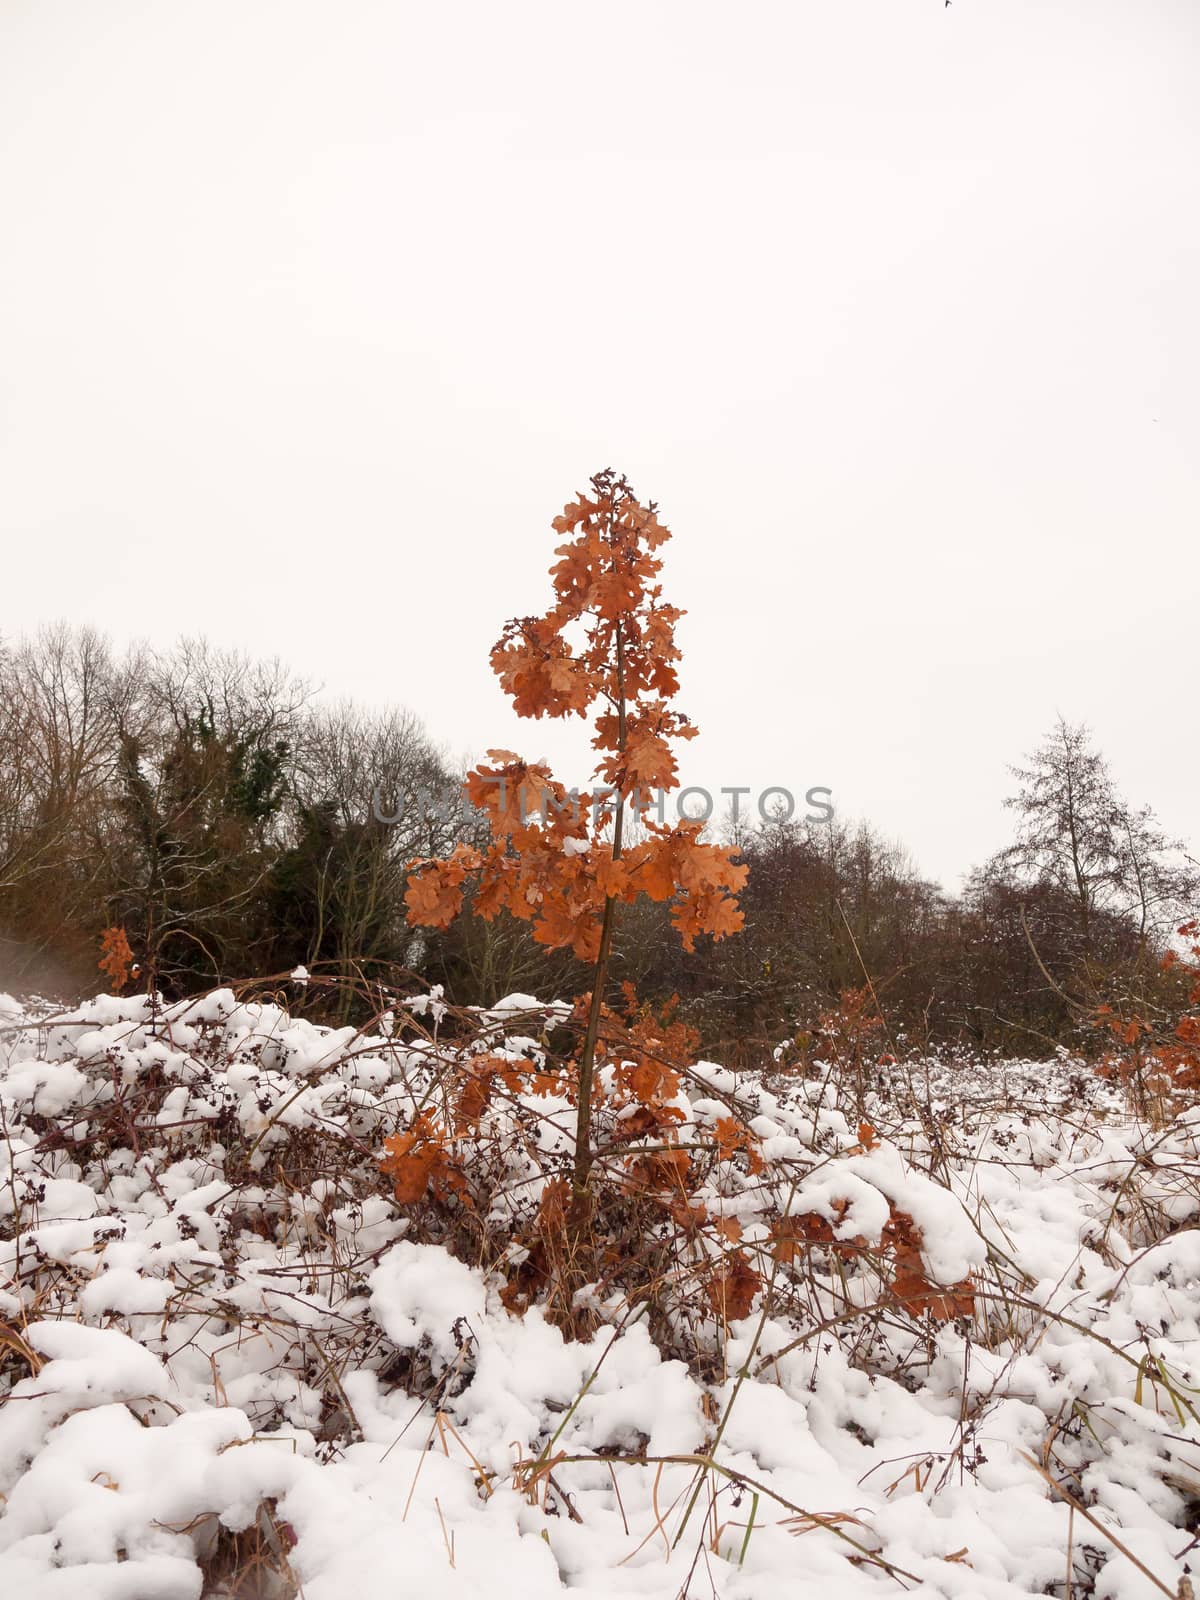 red brown dead tree leafs winter autumn december with snow around; essex; england; uk